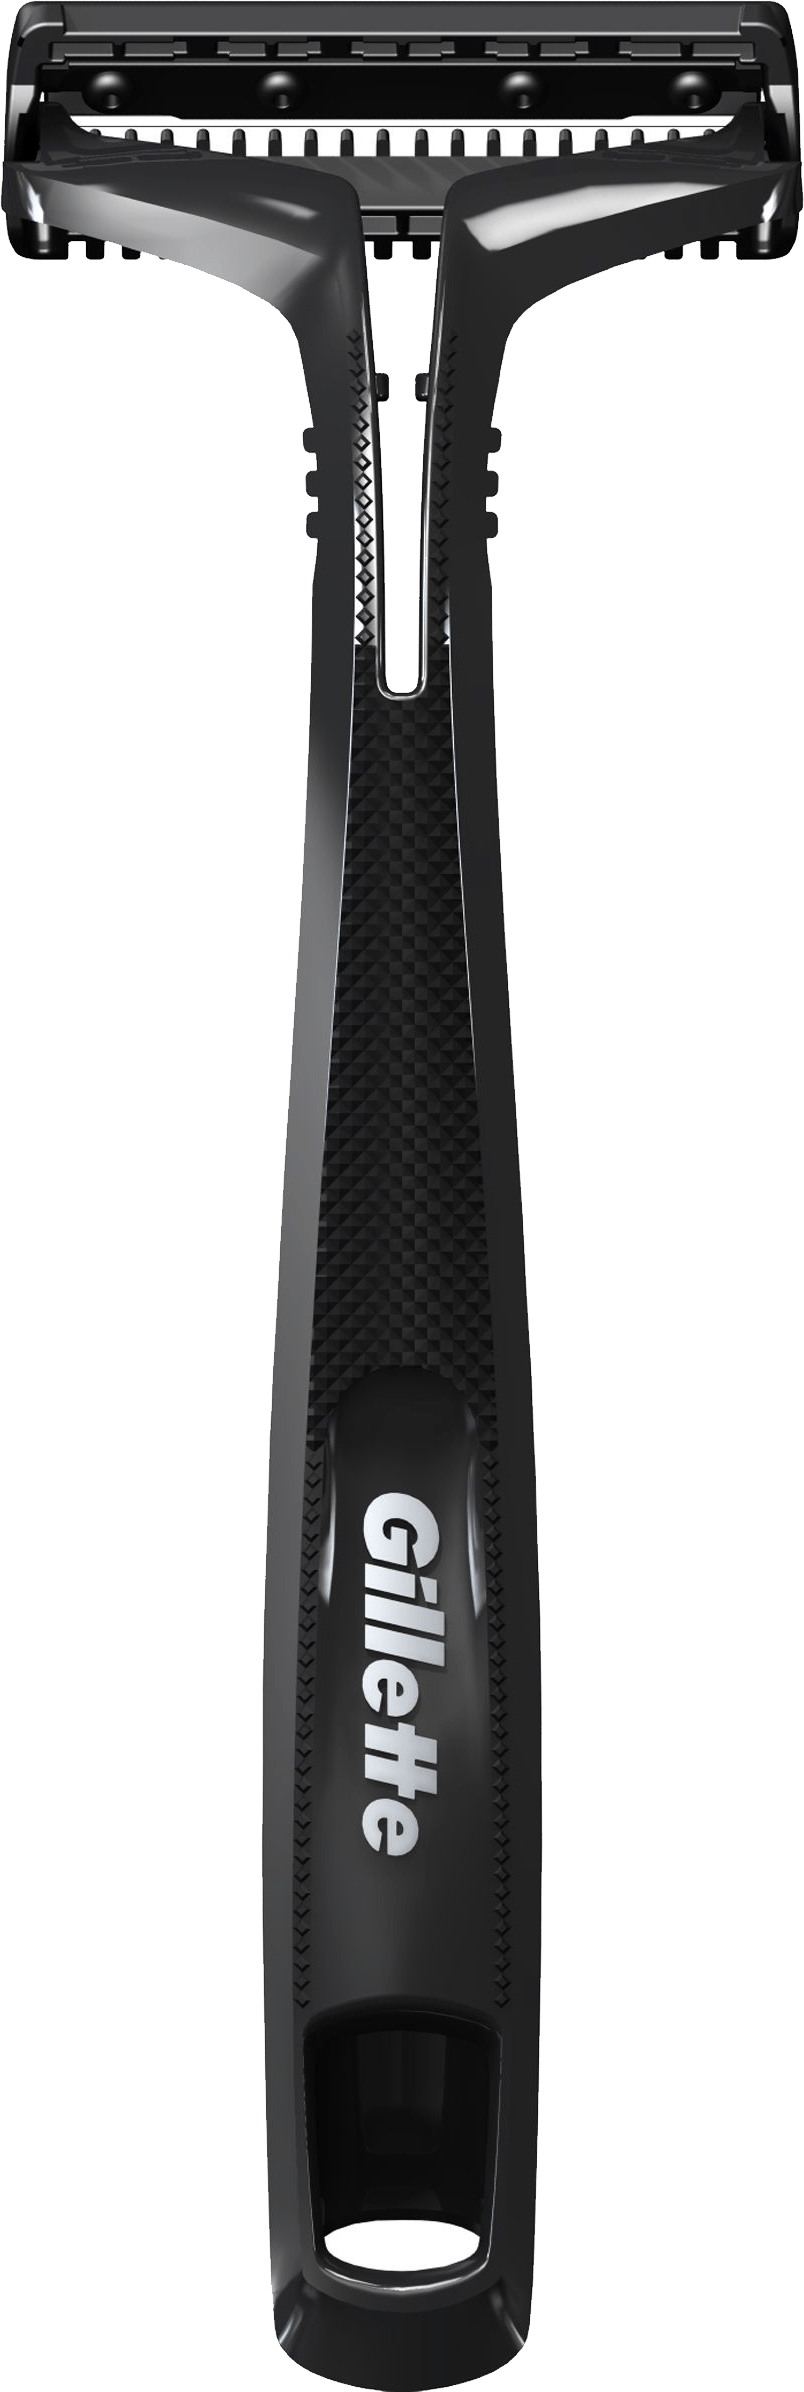 Gillette Razor Shaving PNG File